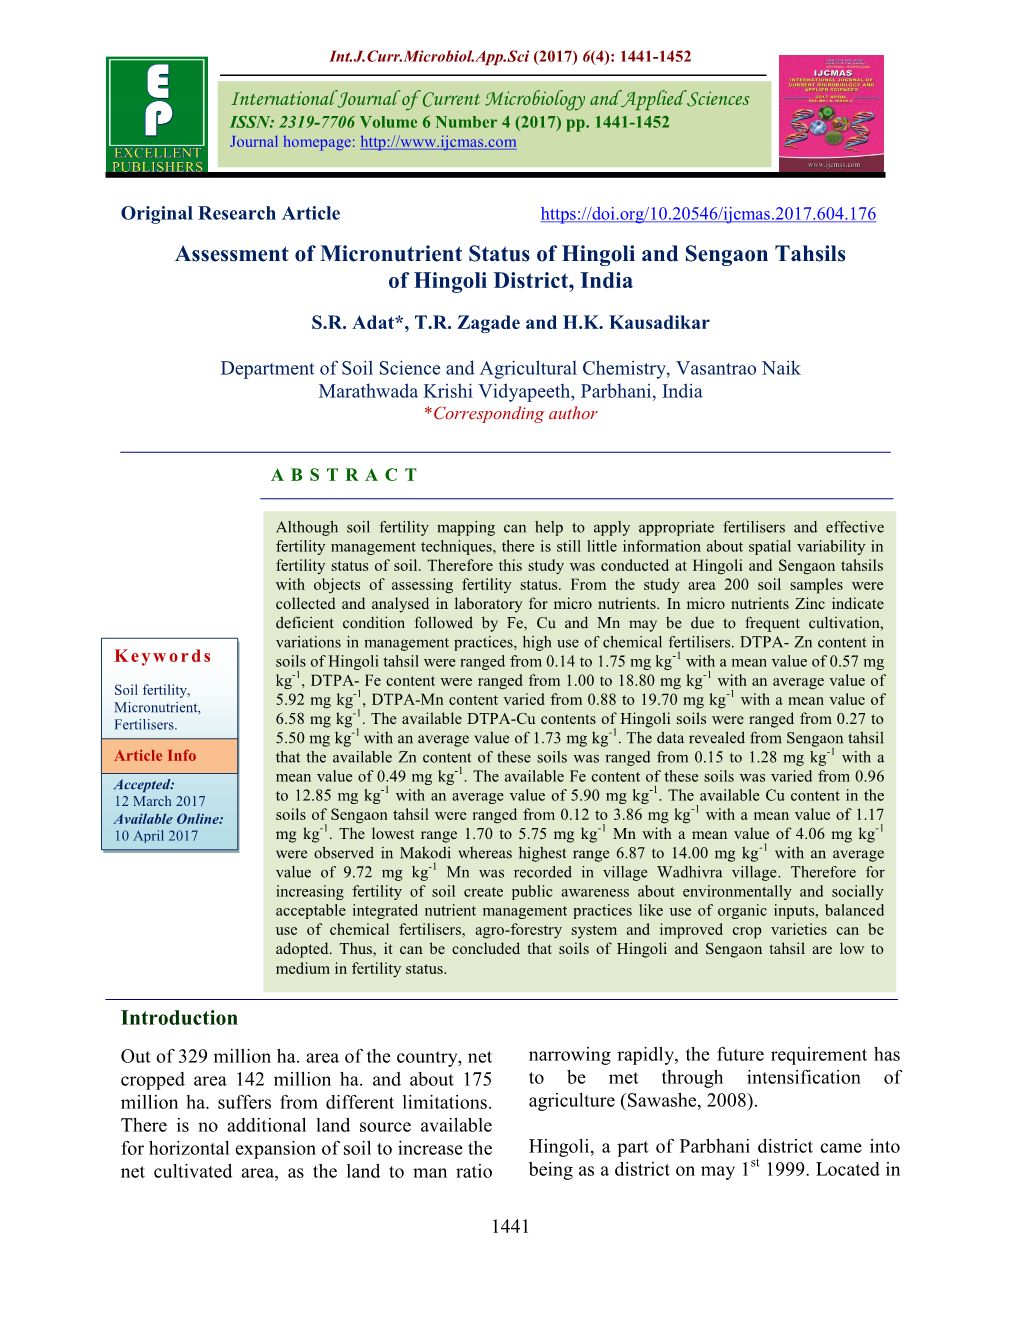 Assessment of Micronutrient Status of Hingoli and Sengaon Tahsils of Hingoli District, India